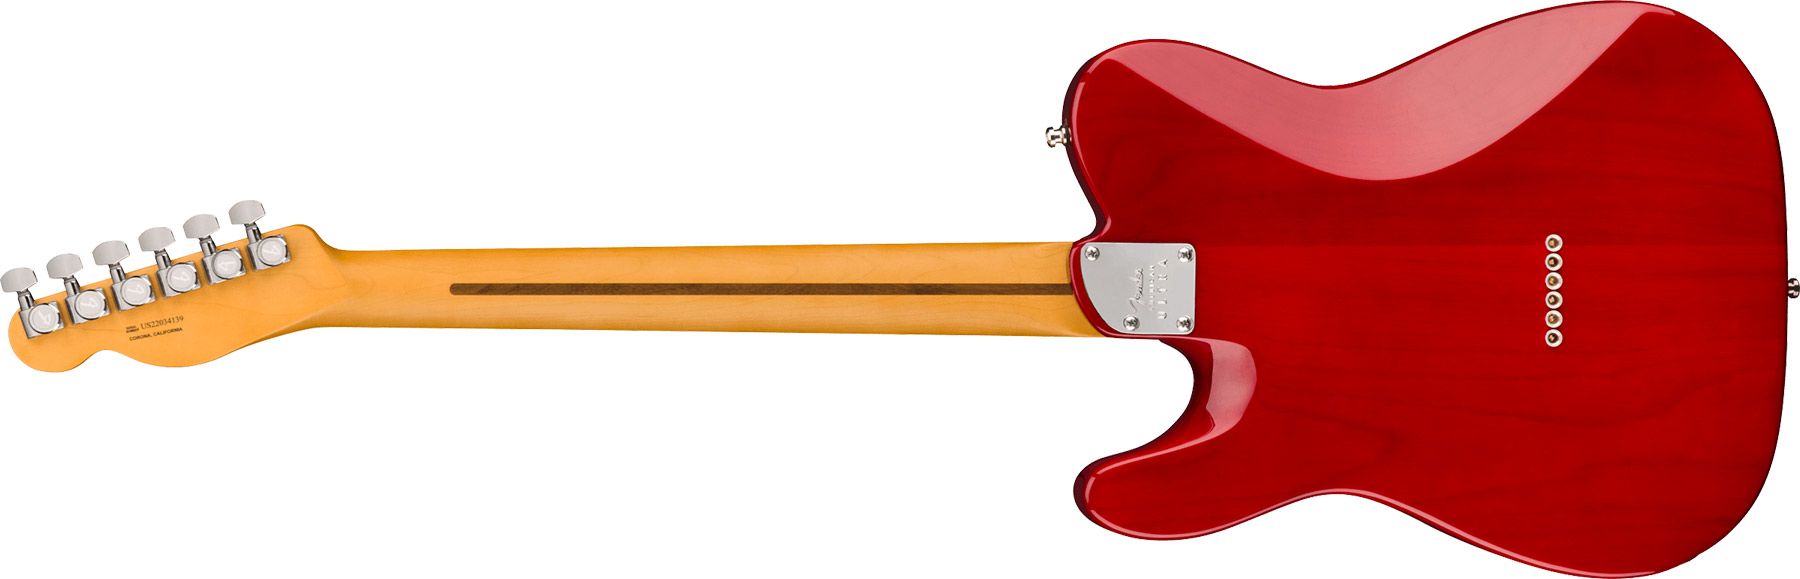 Fender Tele American Ultra Ltd Usa 2s Ht Eb - Umbra - Televorm elektrische gitaar - Variation 1